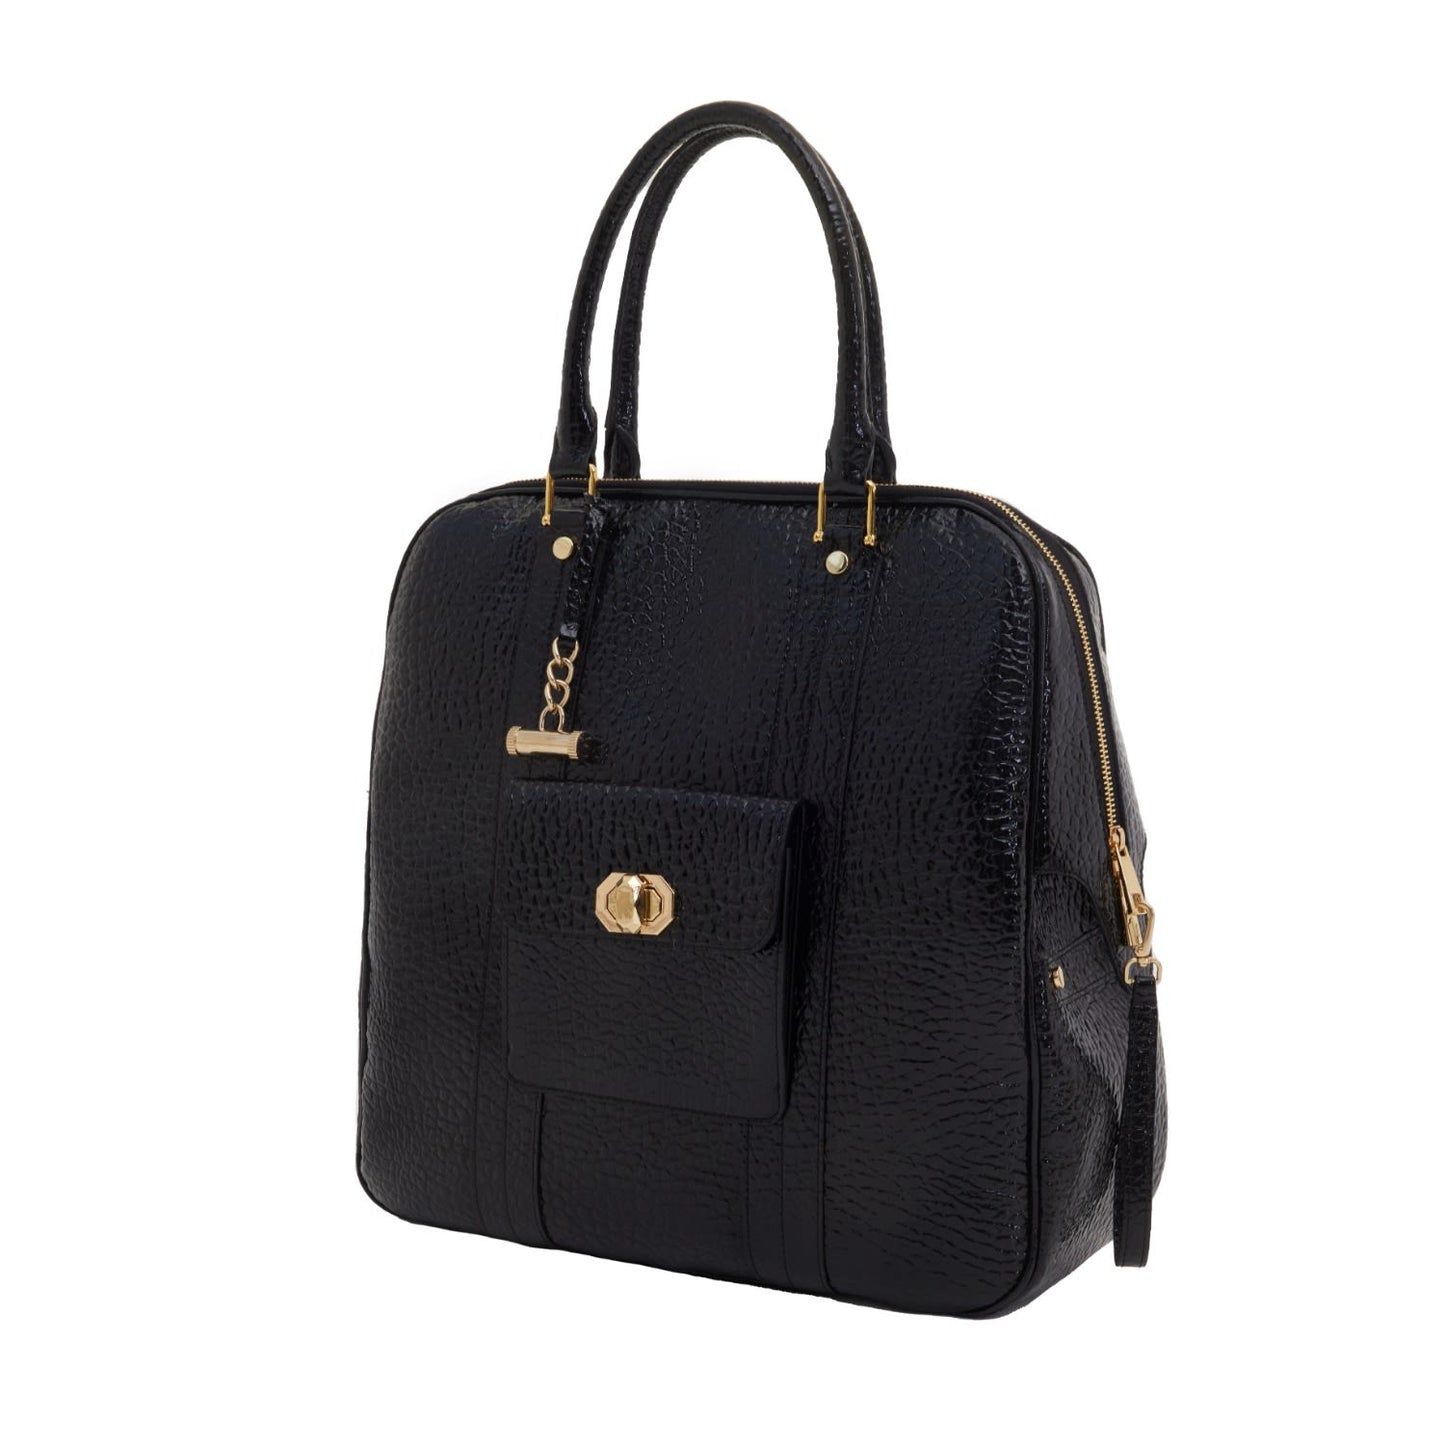 Croco Texture Leather Tote Handbag Black Large